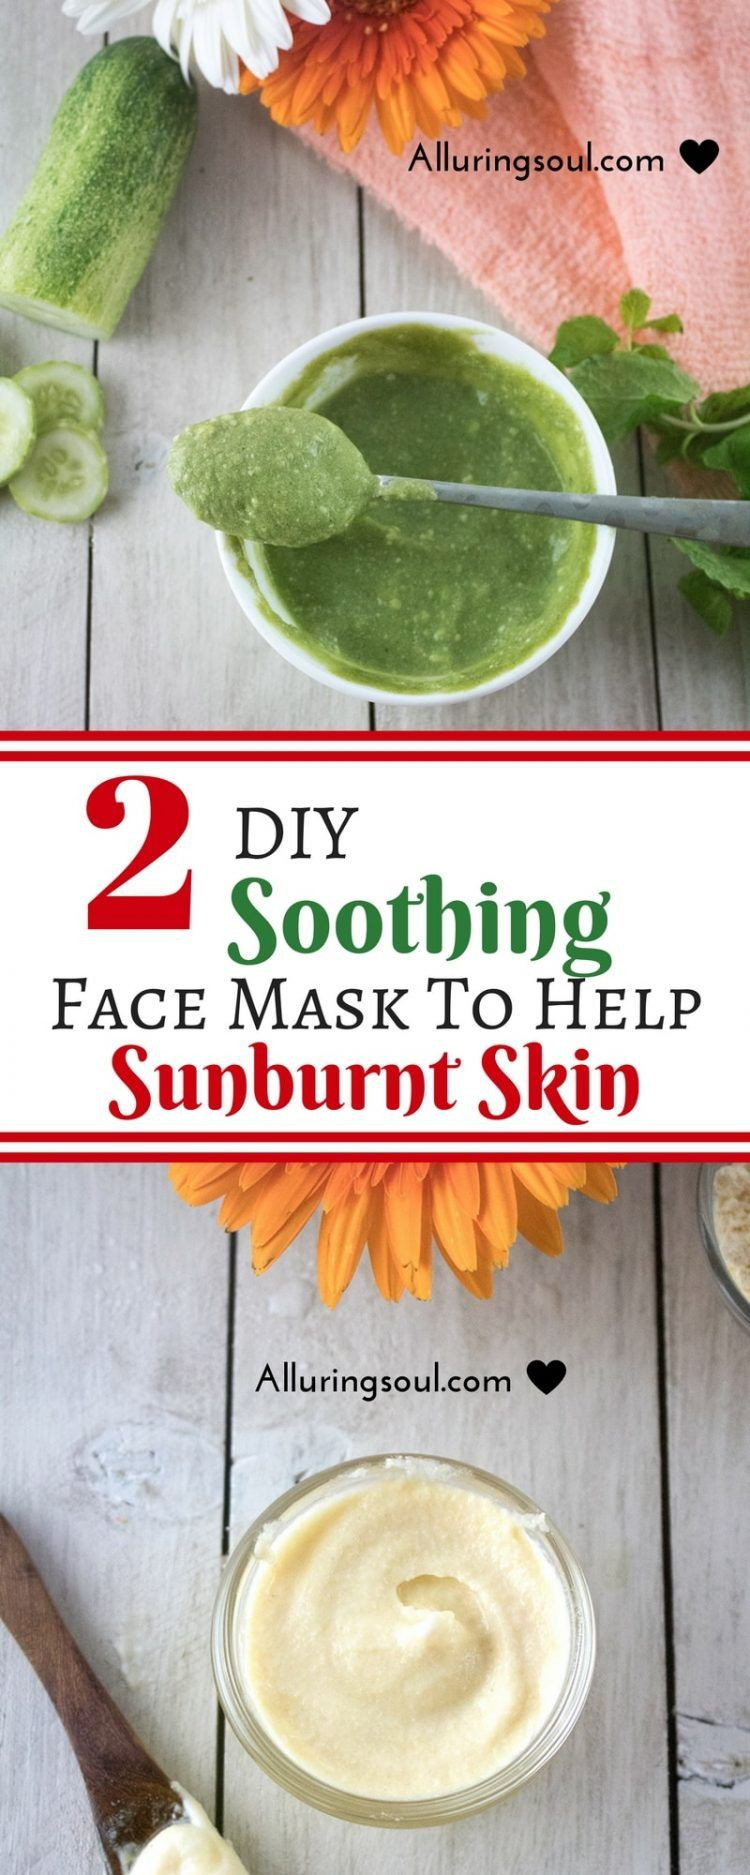 DIY Soothing Face Mask
 2 DIY Soothing Face Mask To Help Sunburnt Skin